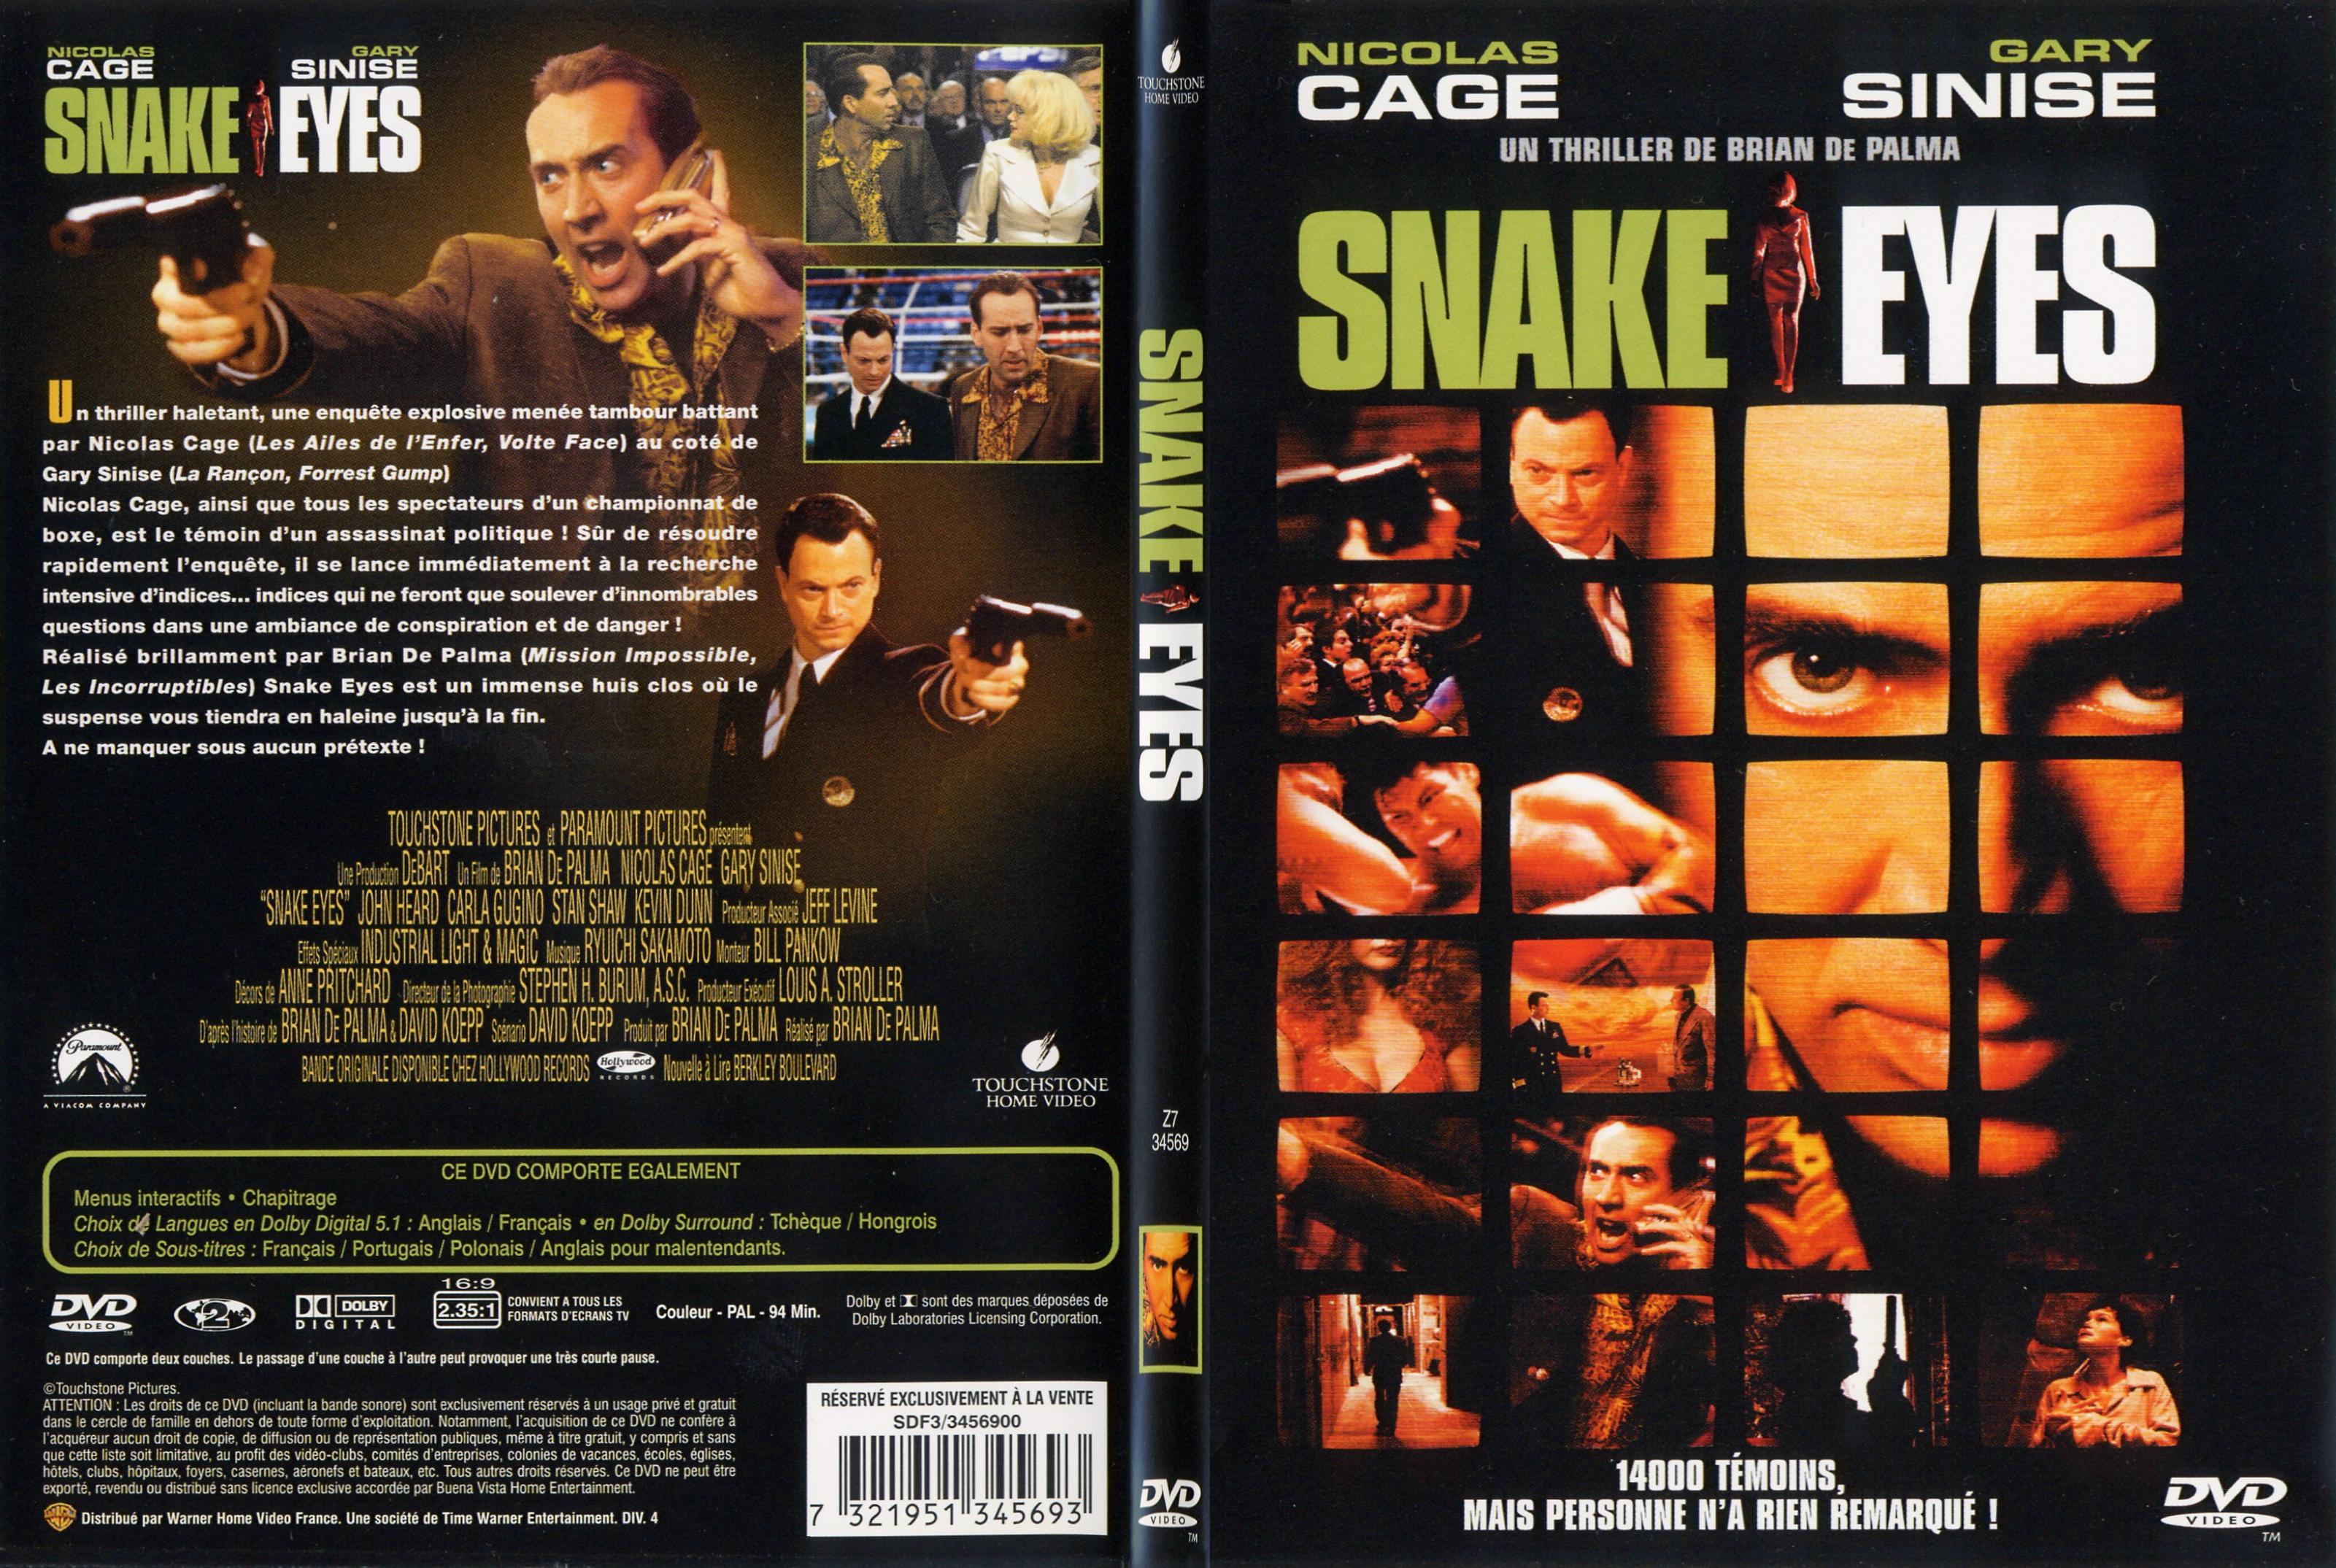 Jaquette DVD Snake eyes - SLIM